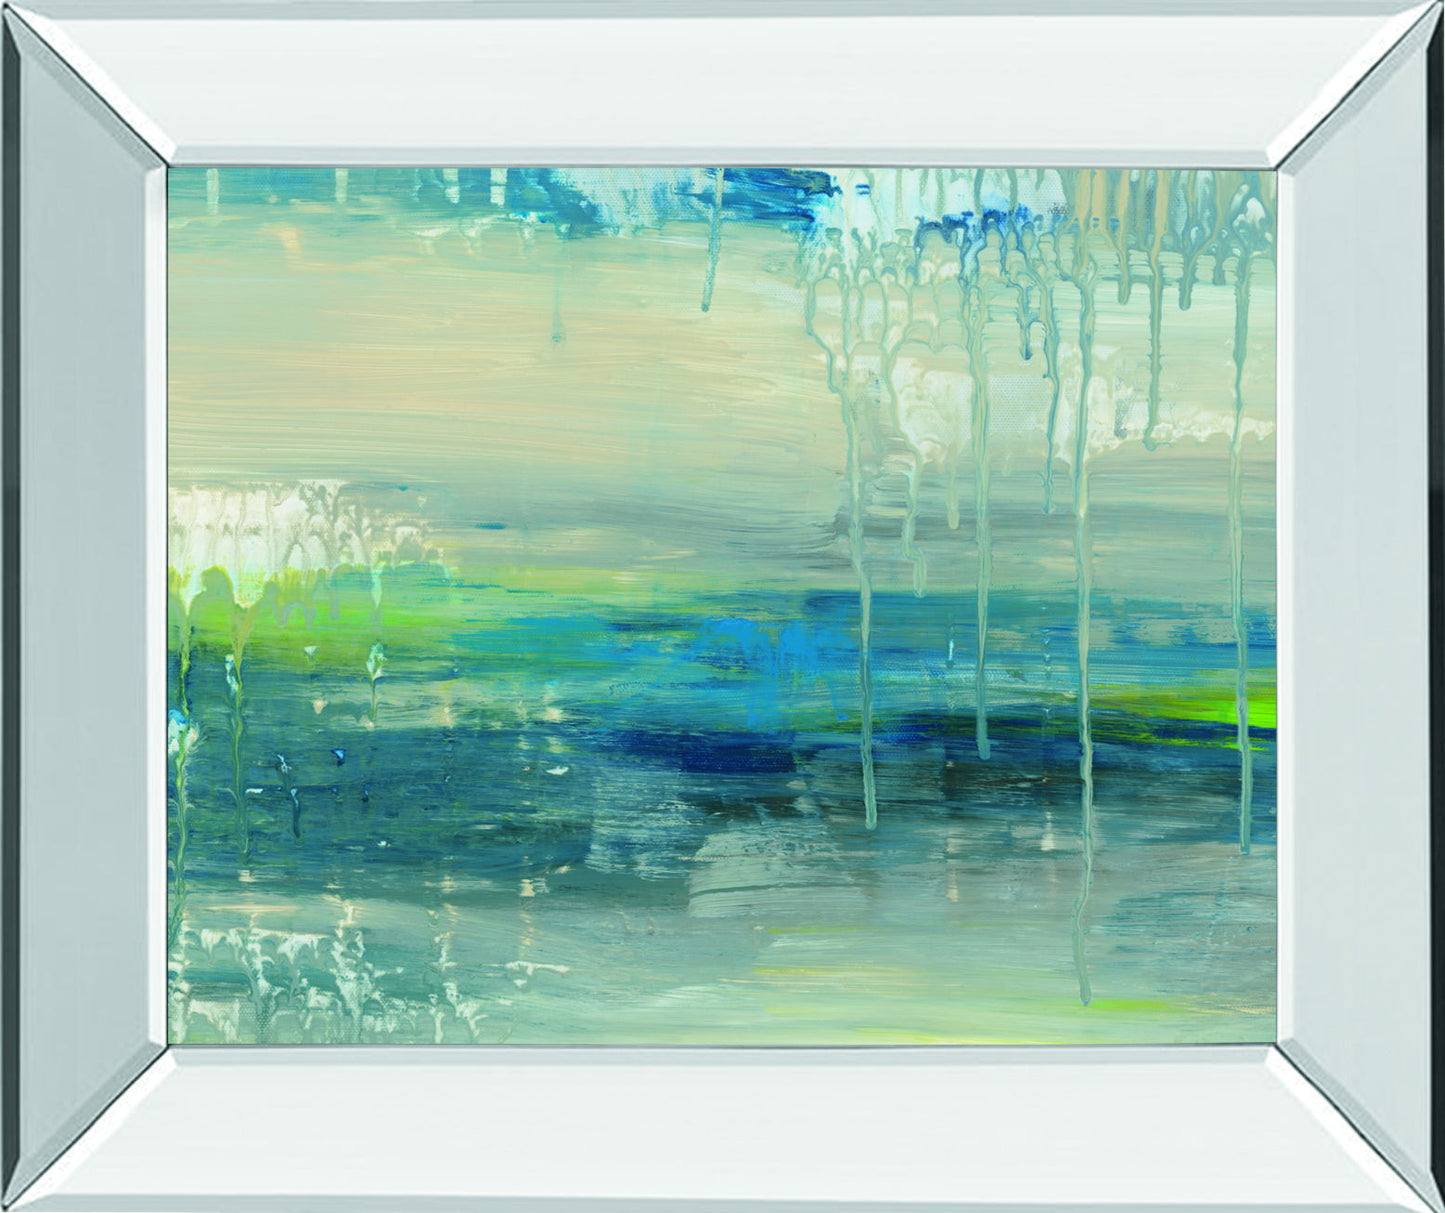 Tasha By Wani Pasion - Mirror Framed Print Wall Art - Blue